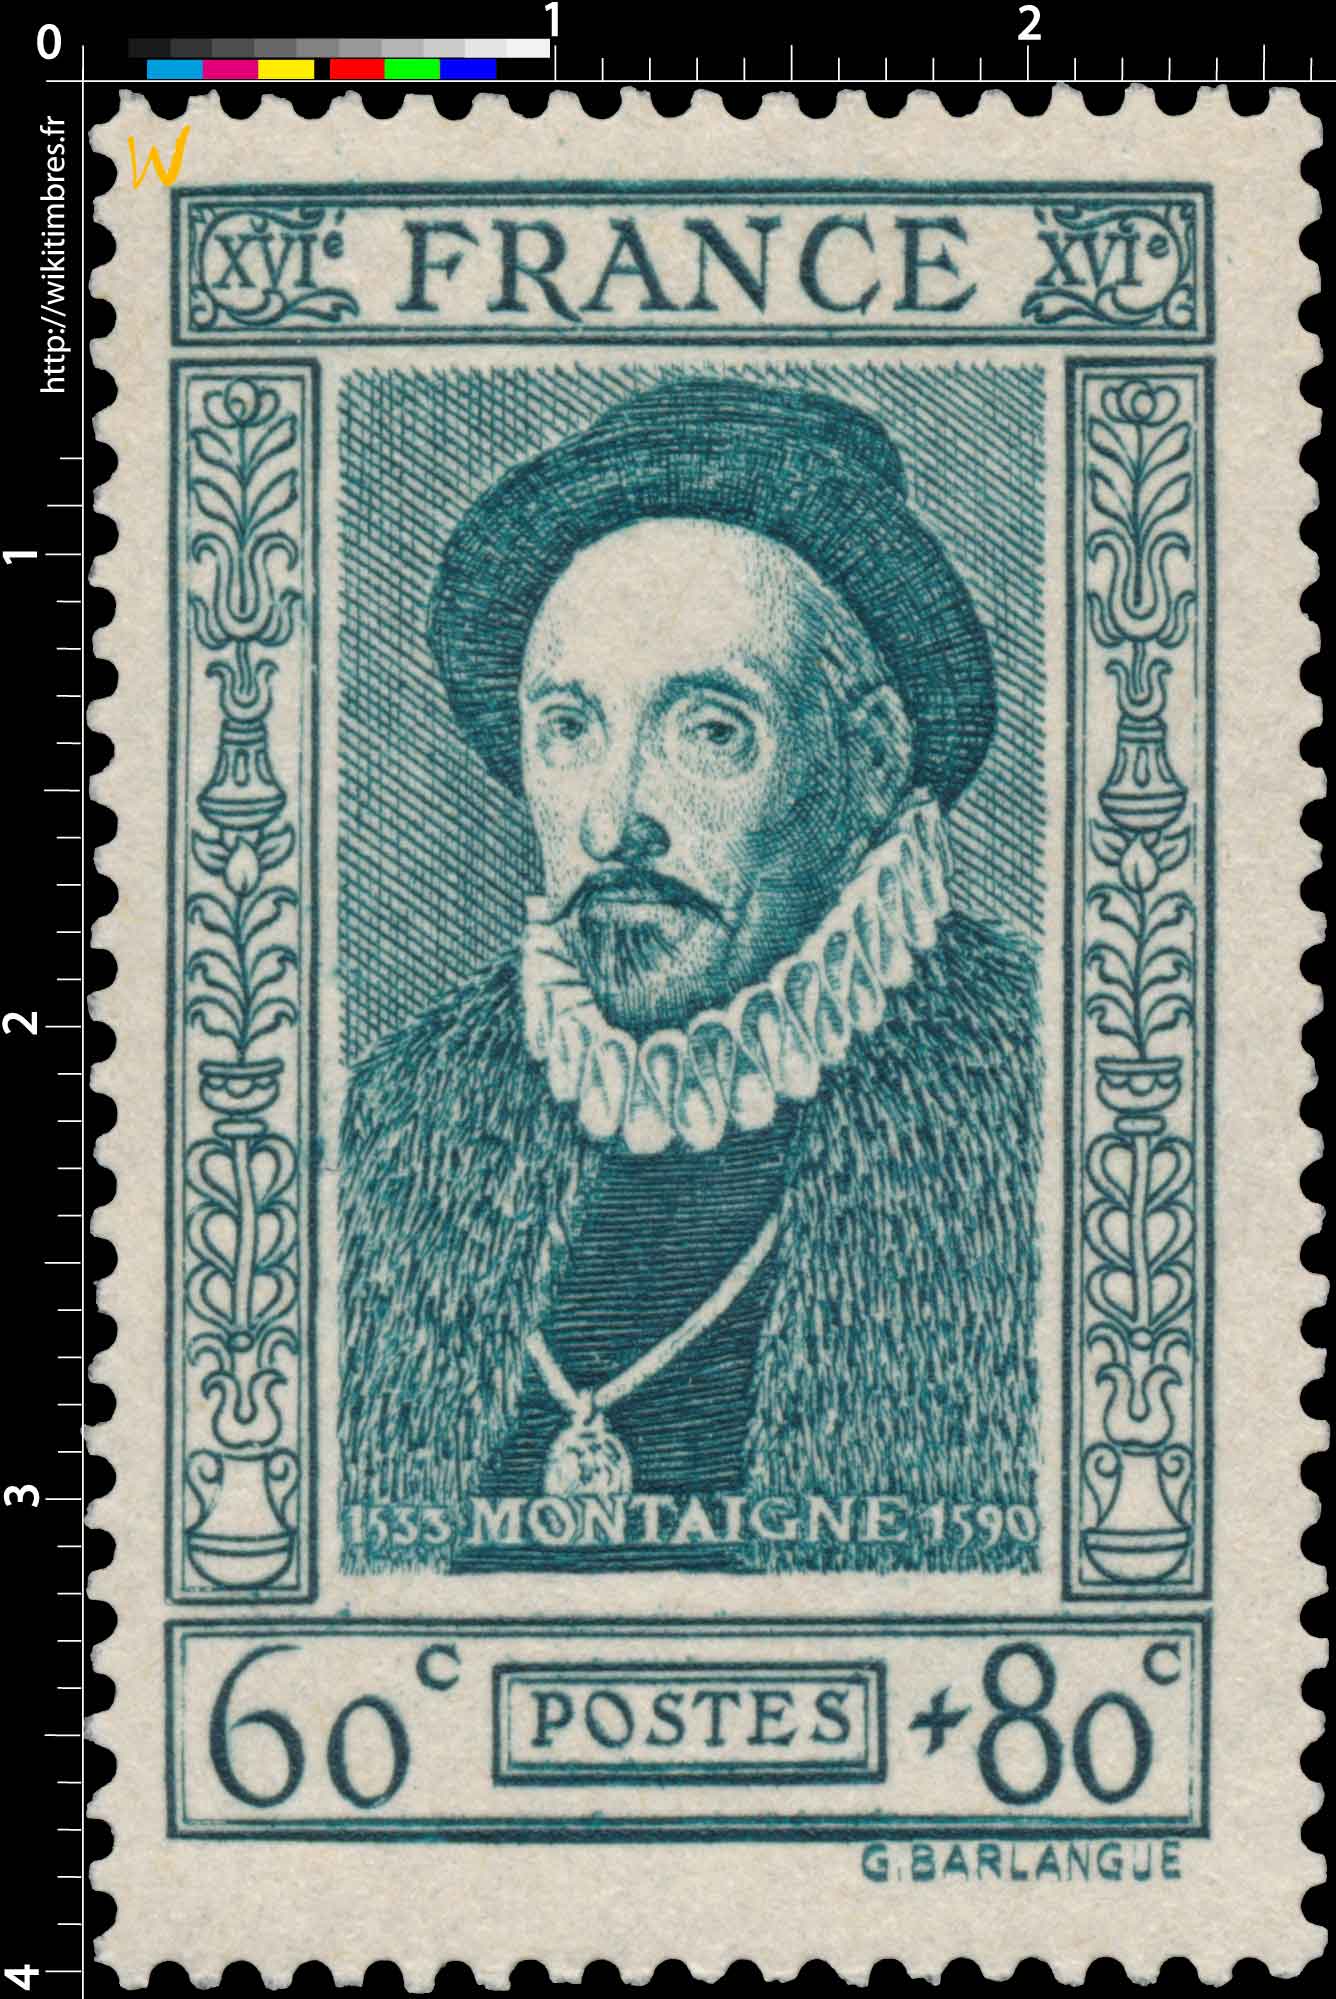 MONTAIGNE 1533-1590